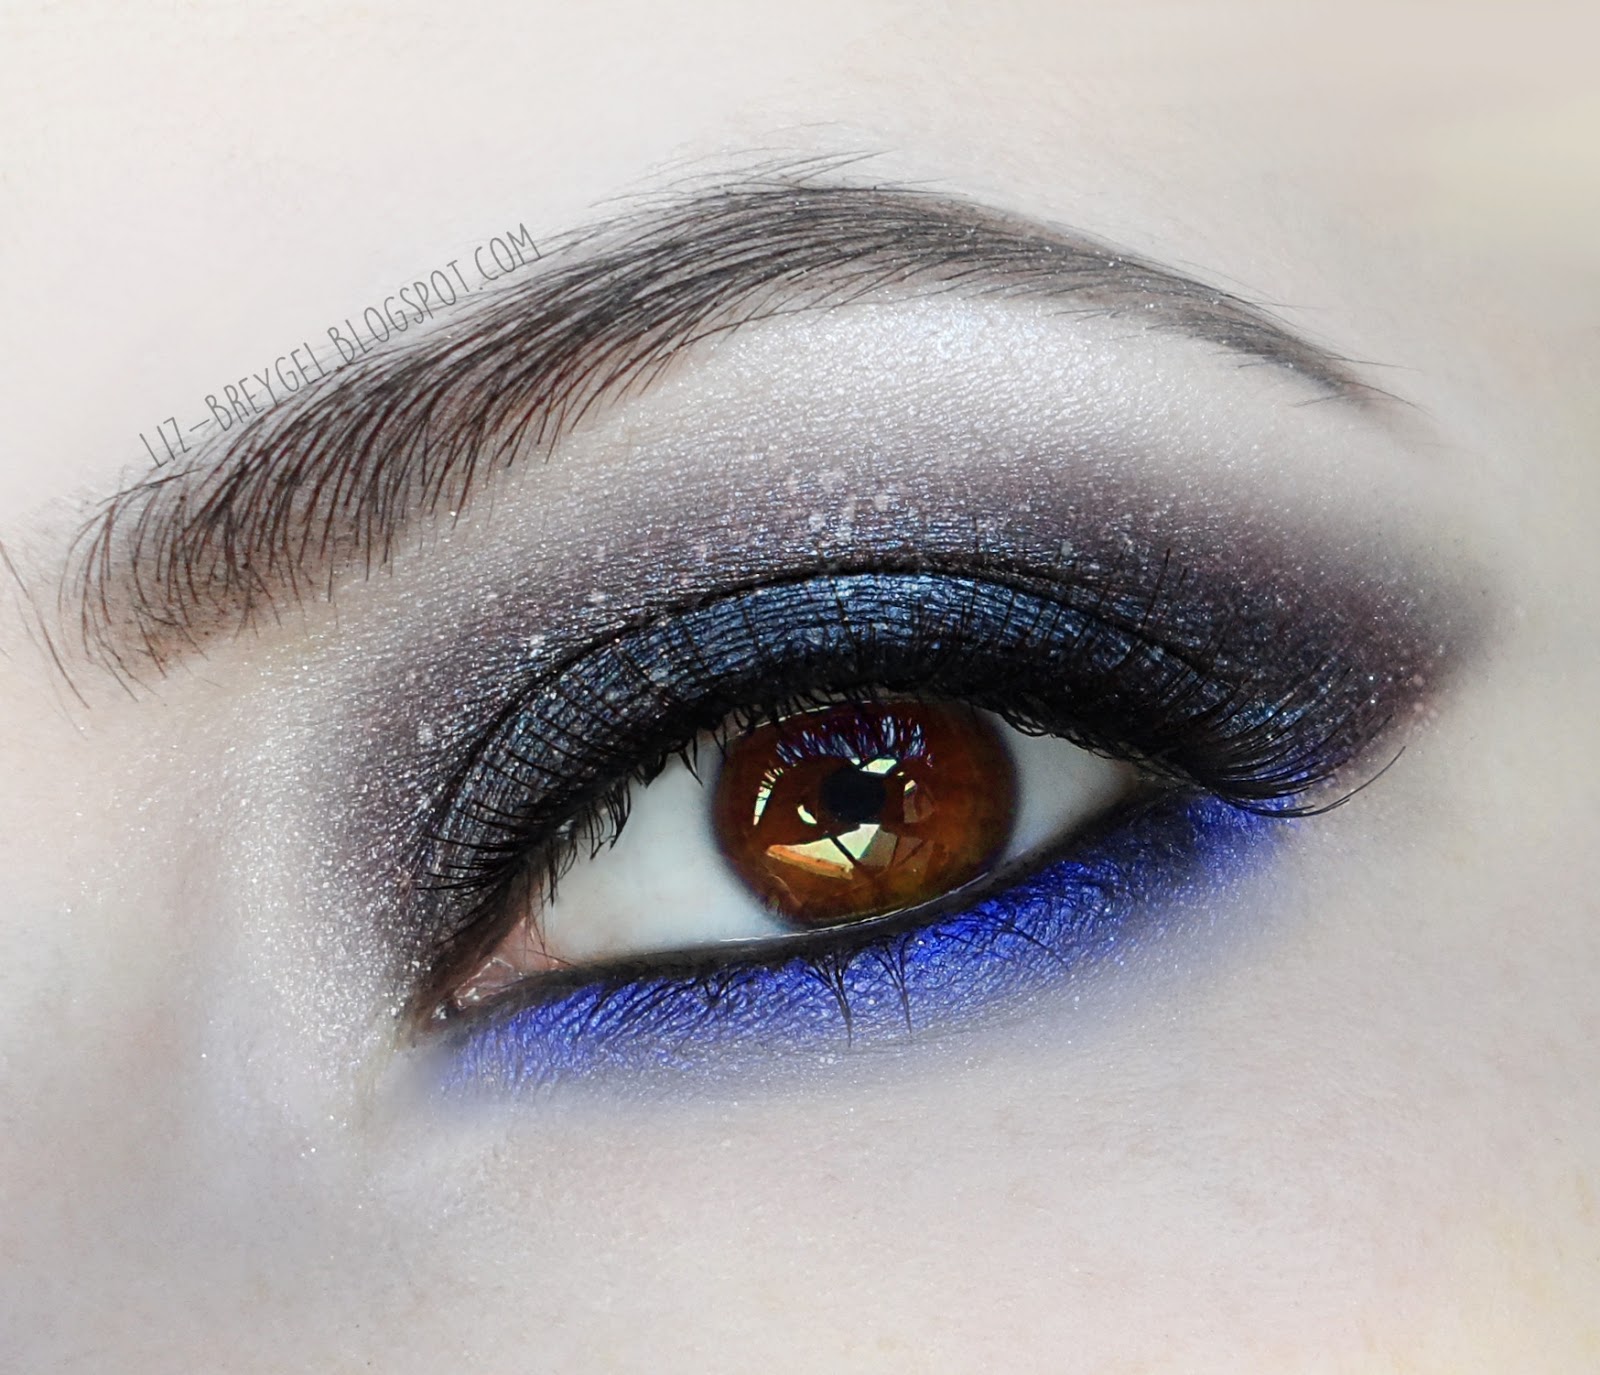 liz breygel beauty blogger step by step makeup tutorial grunge gothic metallic smoky eye